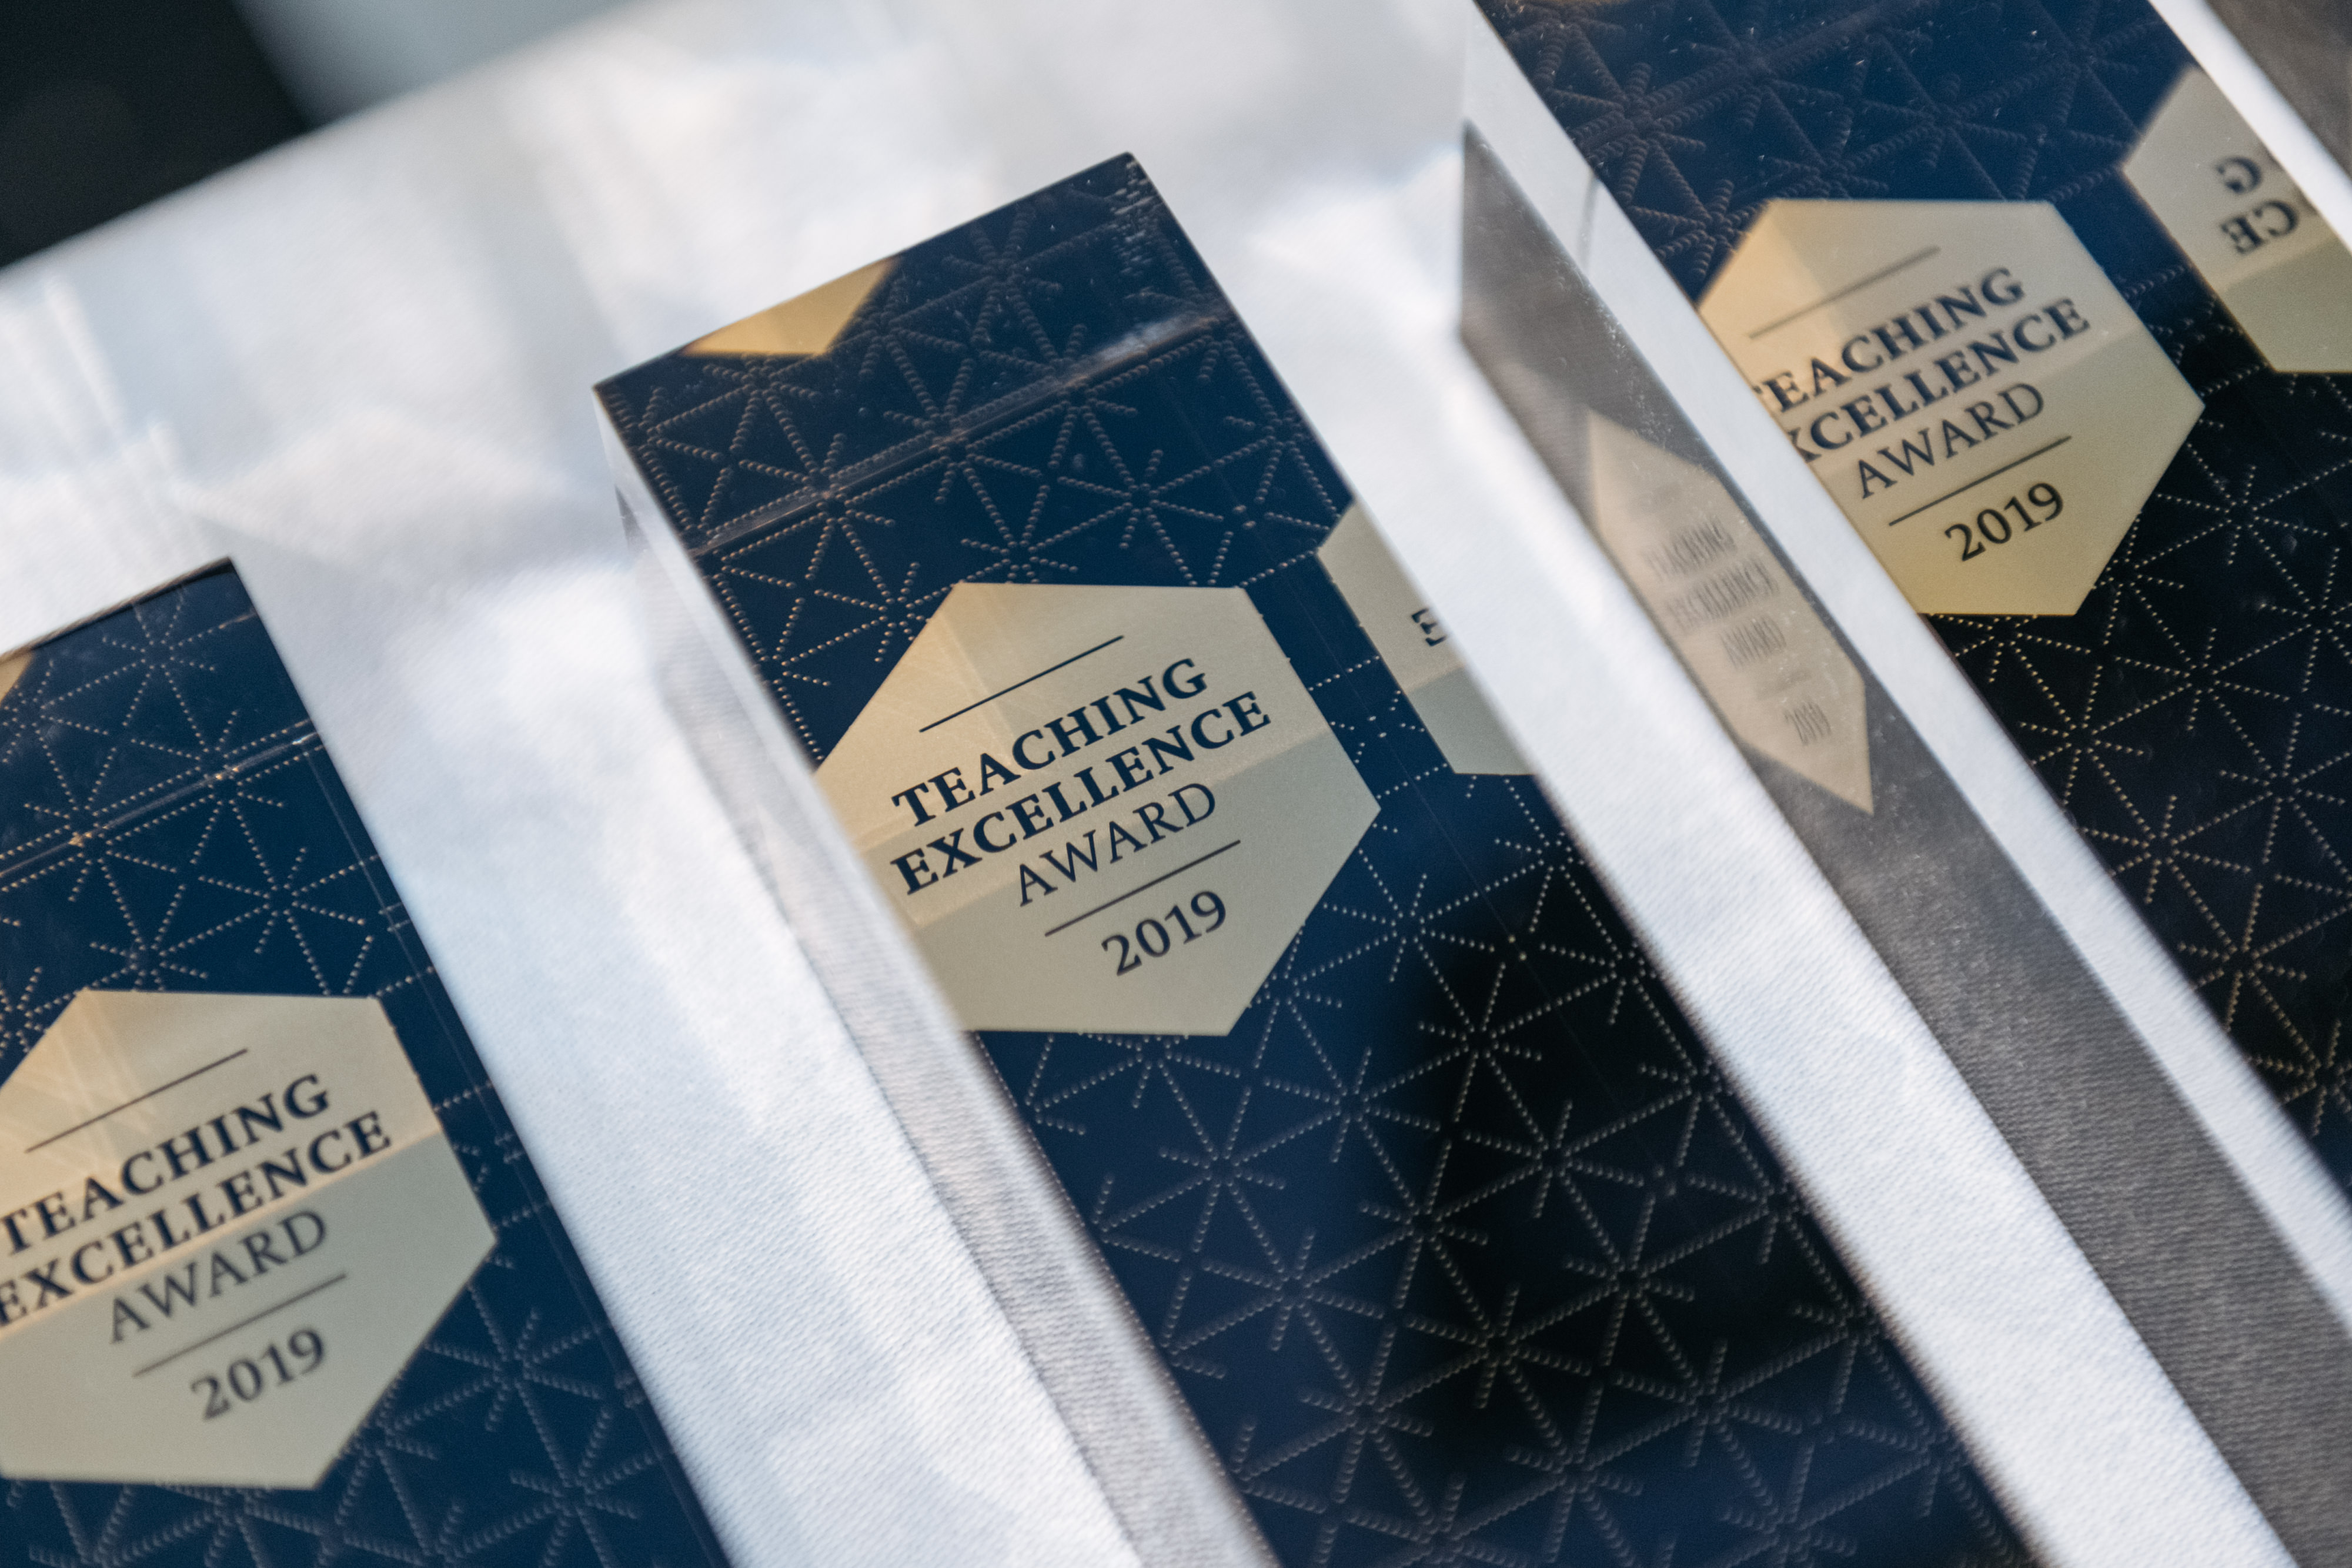 Teaching Excellence Award 2019